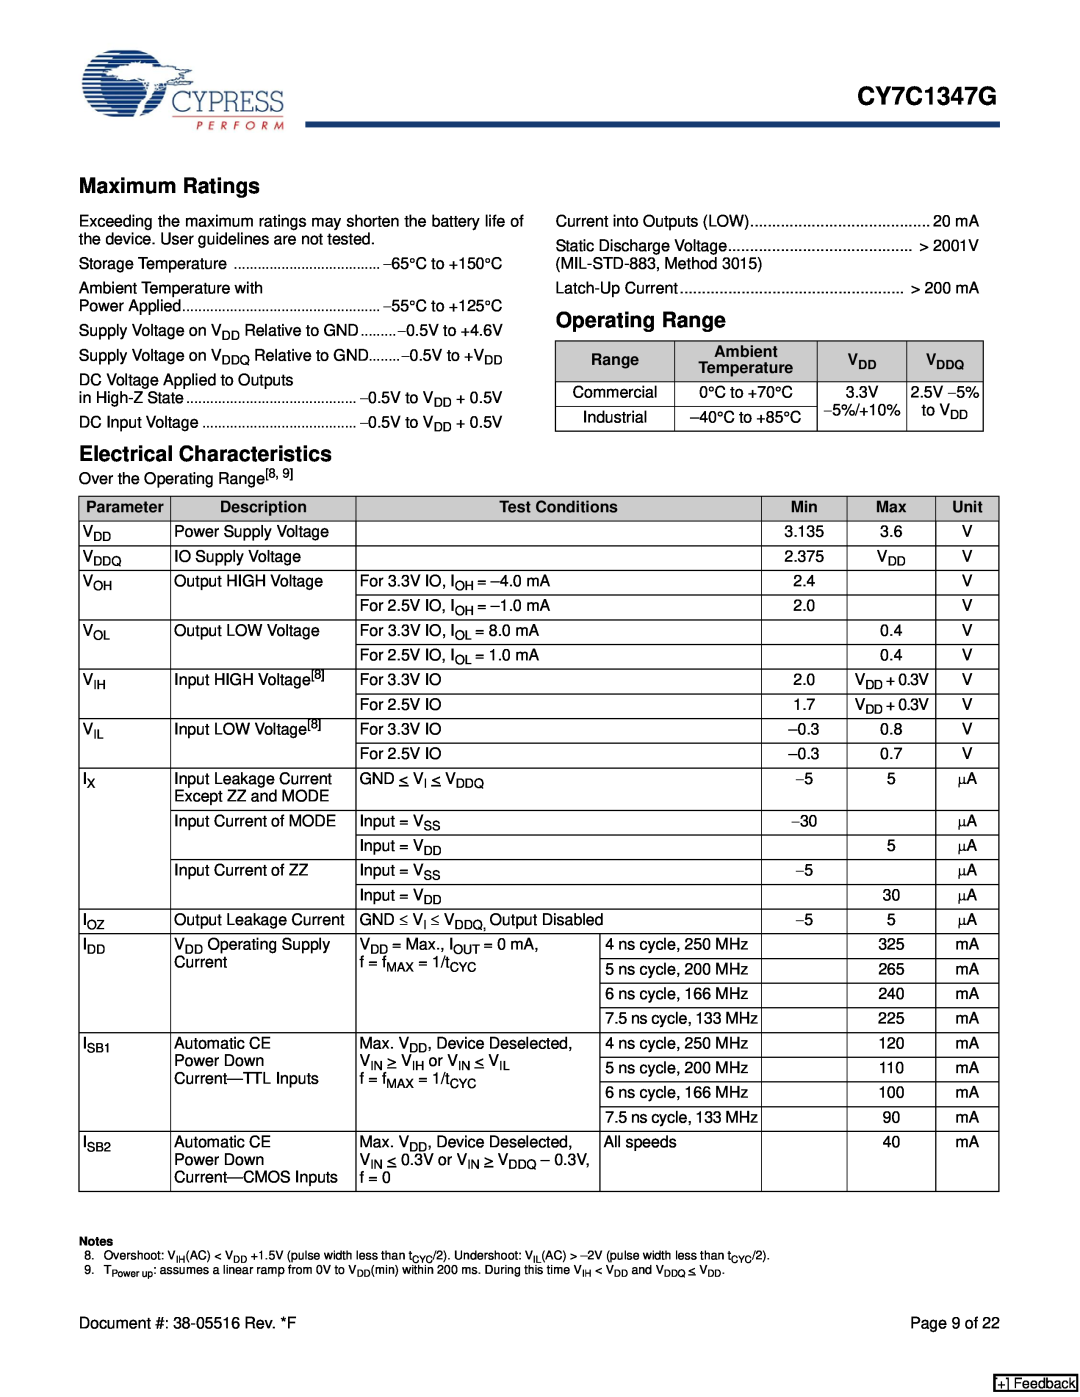 Cypress CY7C1347G manual Maximum Ratings, Electrical Characteristics, Operating Range, Vddq, Temperature 